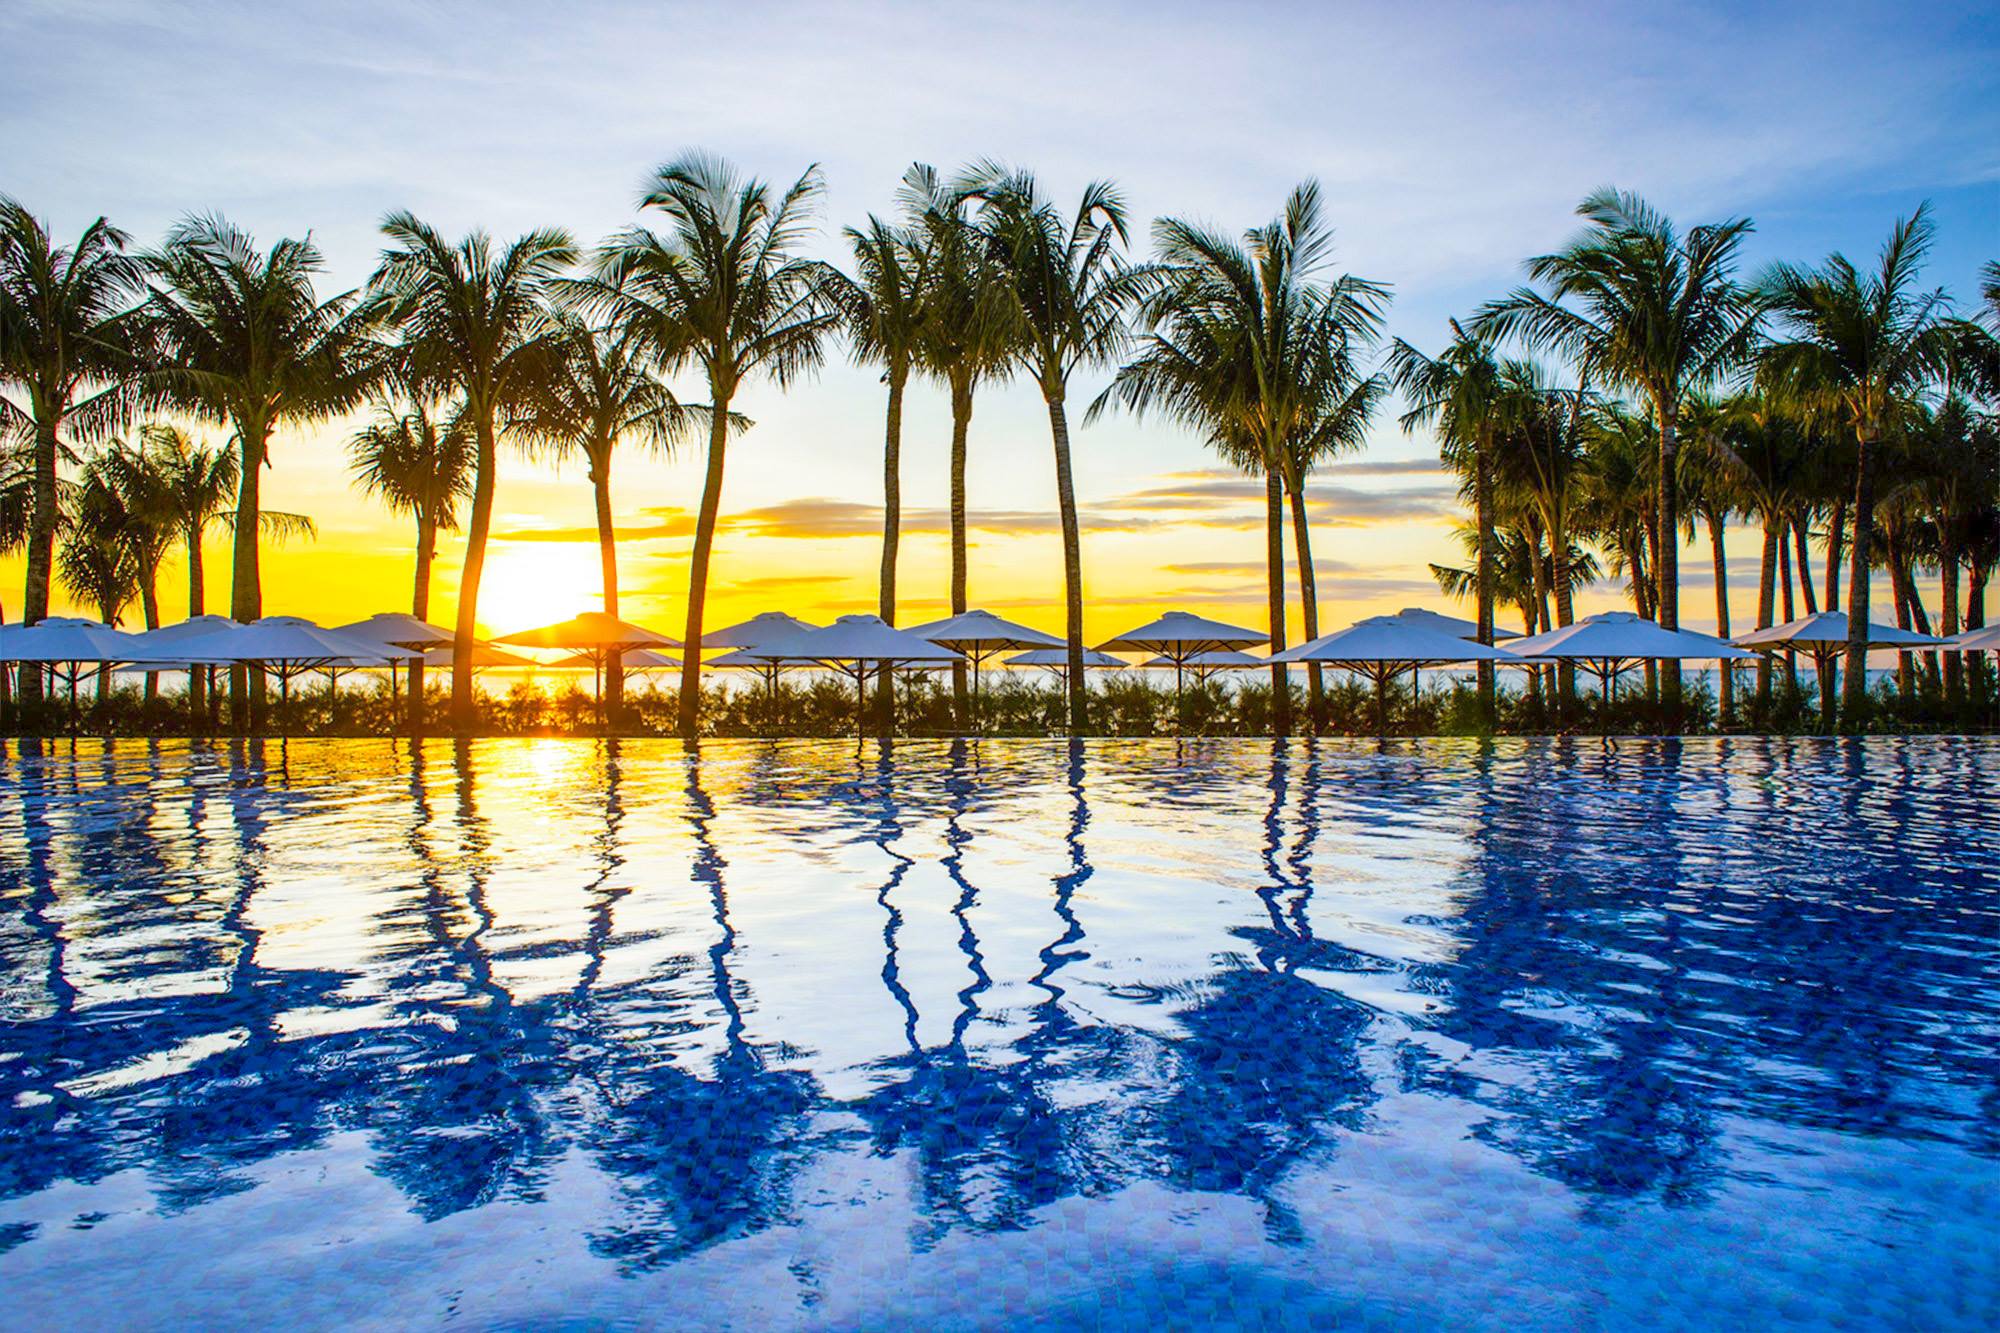 Salinda Resort Phu Quoc Island is proudly recognised as top 5 luxury hotels in Vietnam as voted by TripAdvisor in 2017